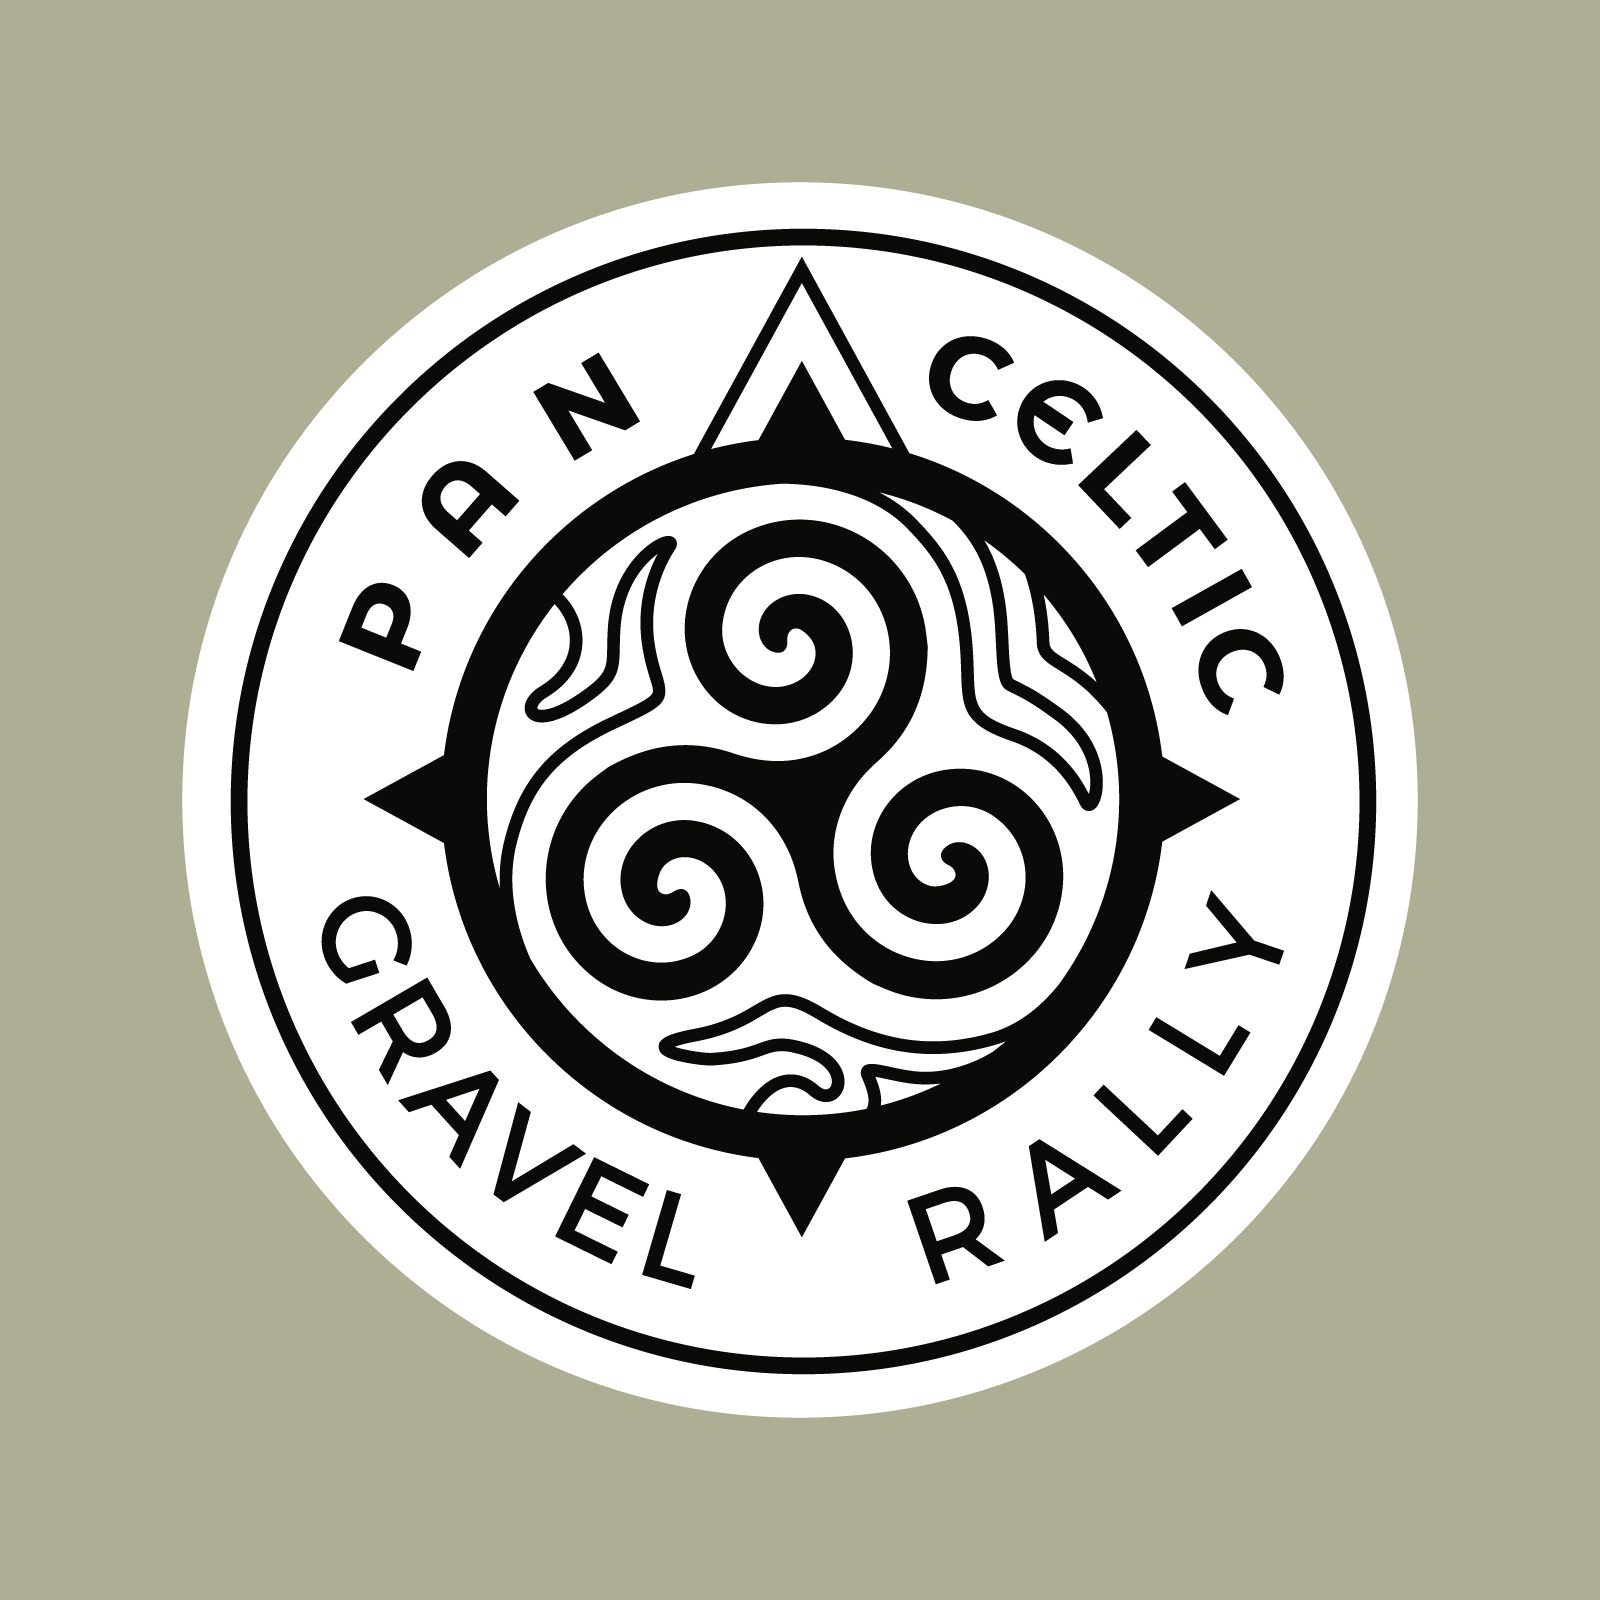 Pan Celtic Gravel Rally